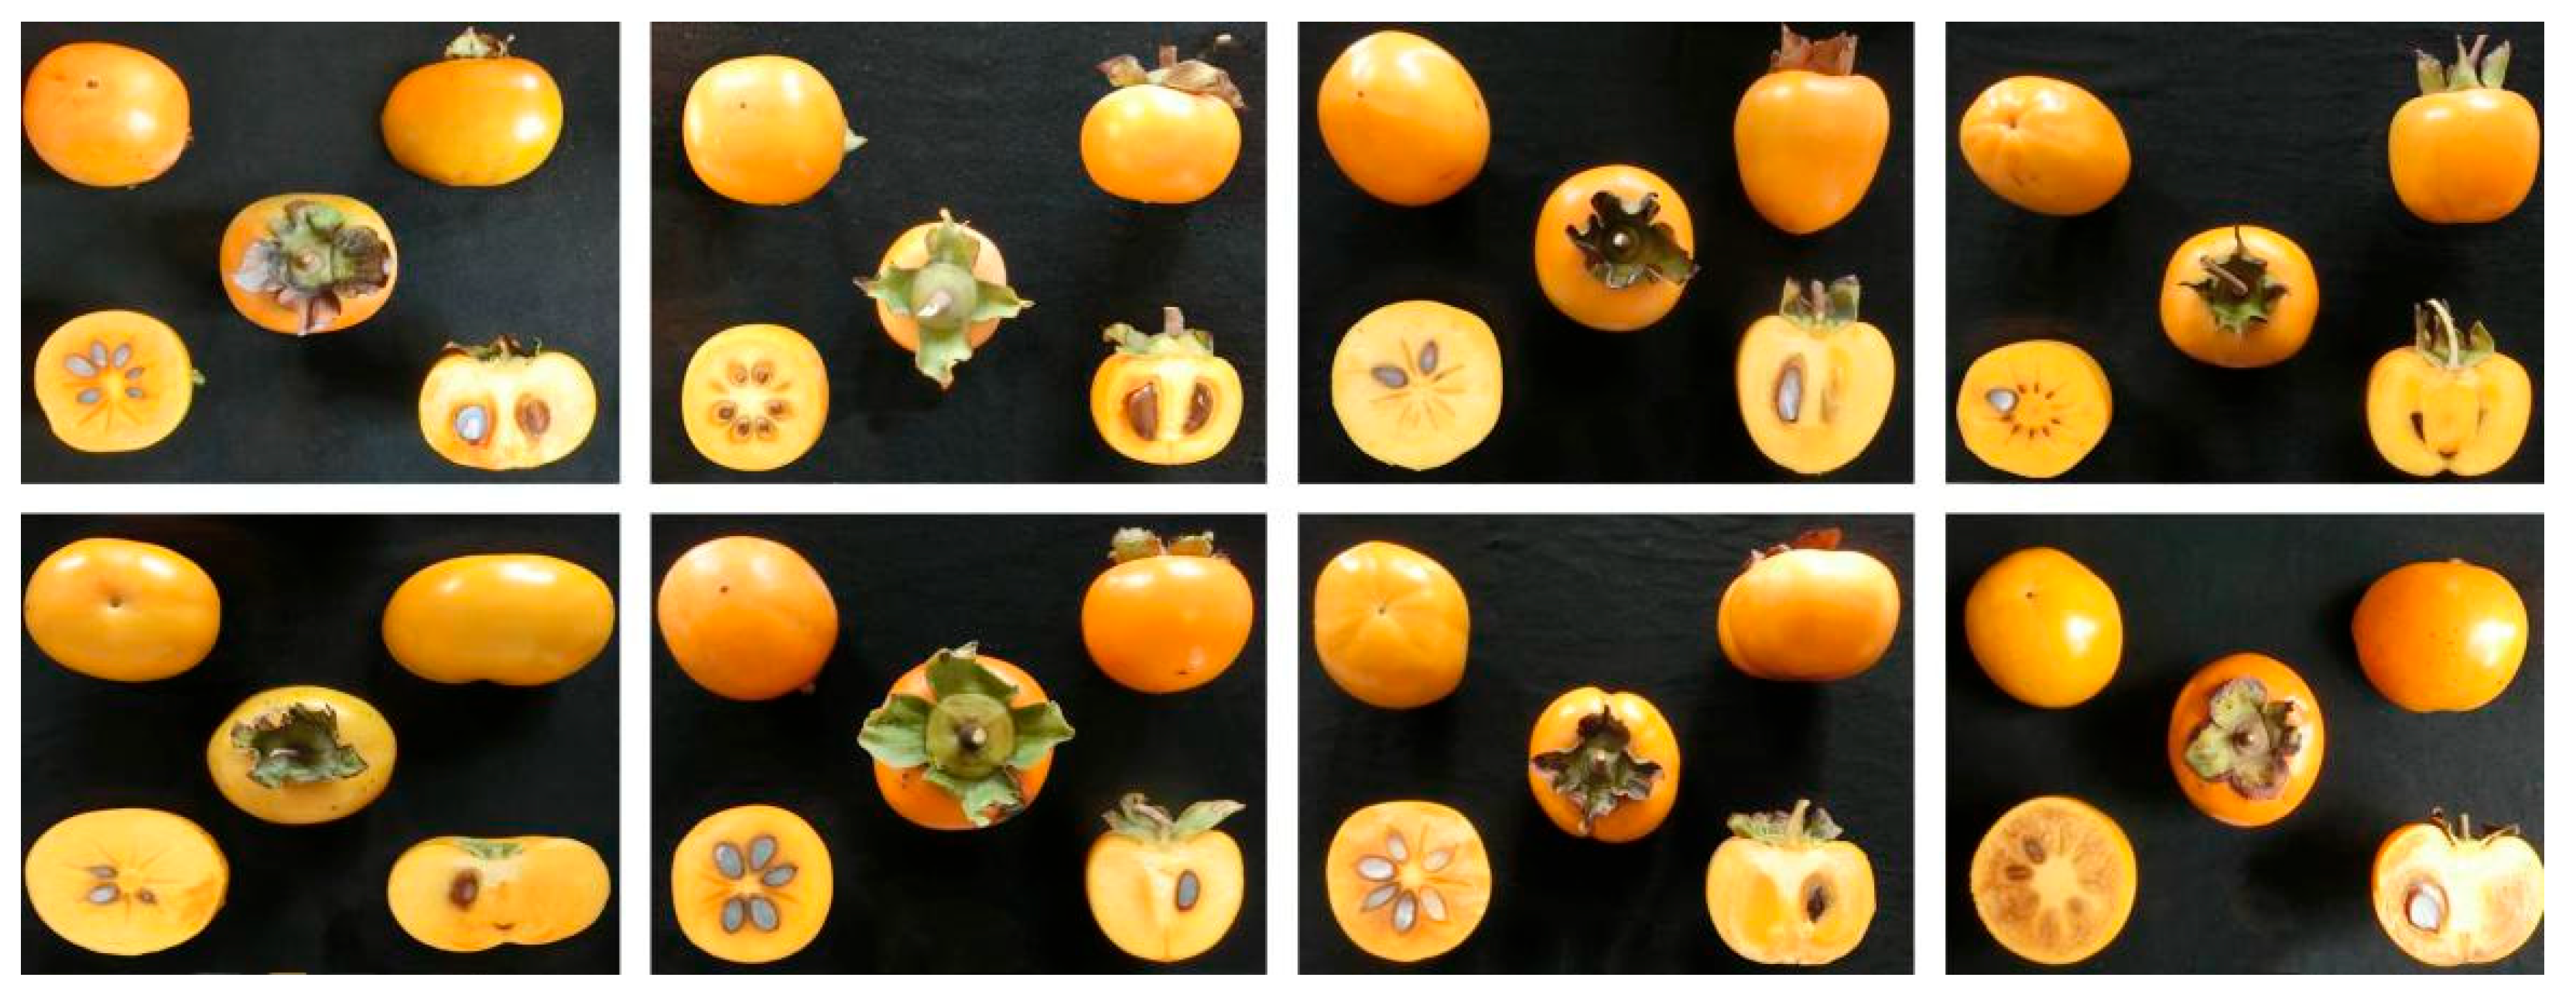 Development and ripening of persimmon (Diospyros kaki Thunb. cv